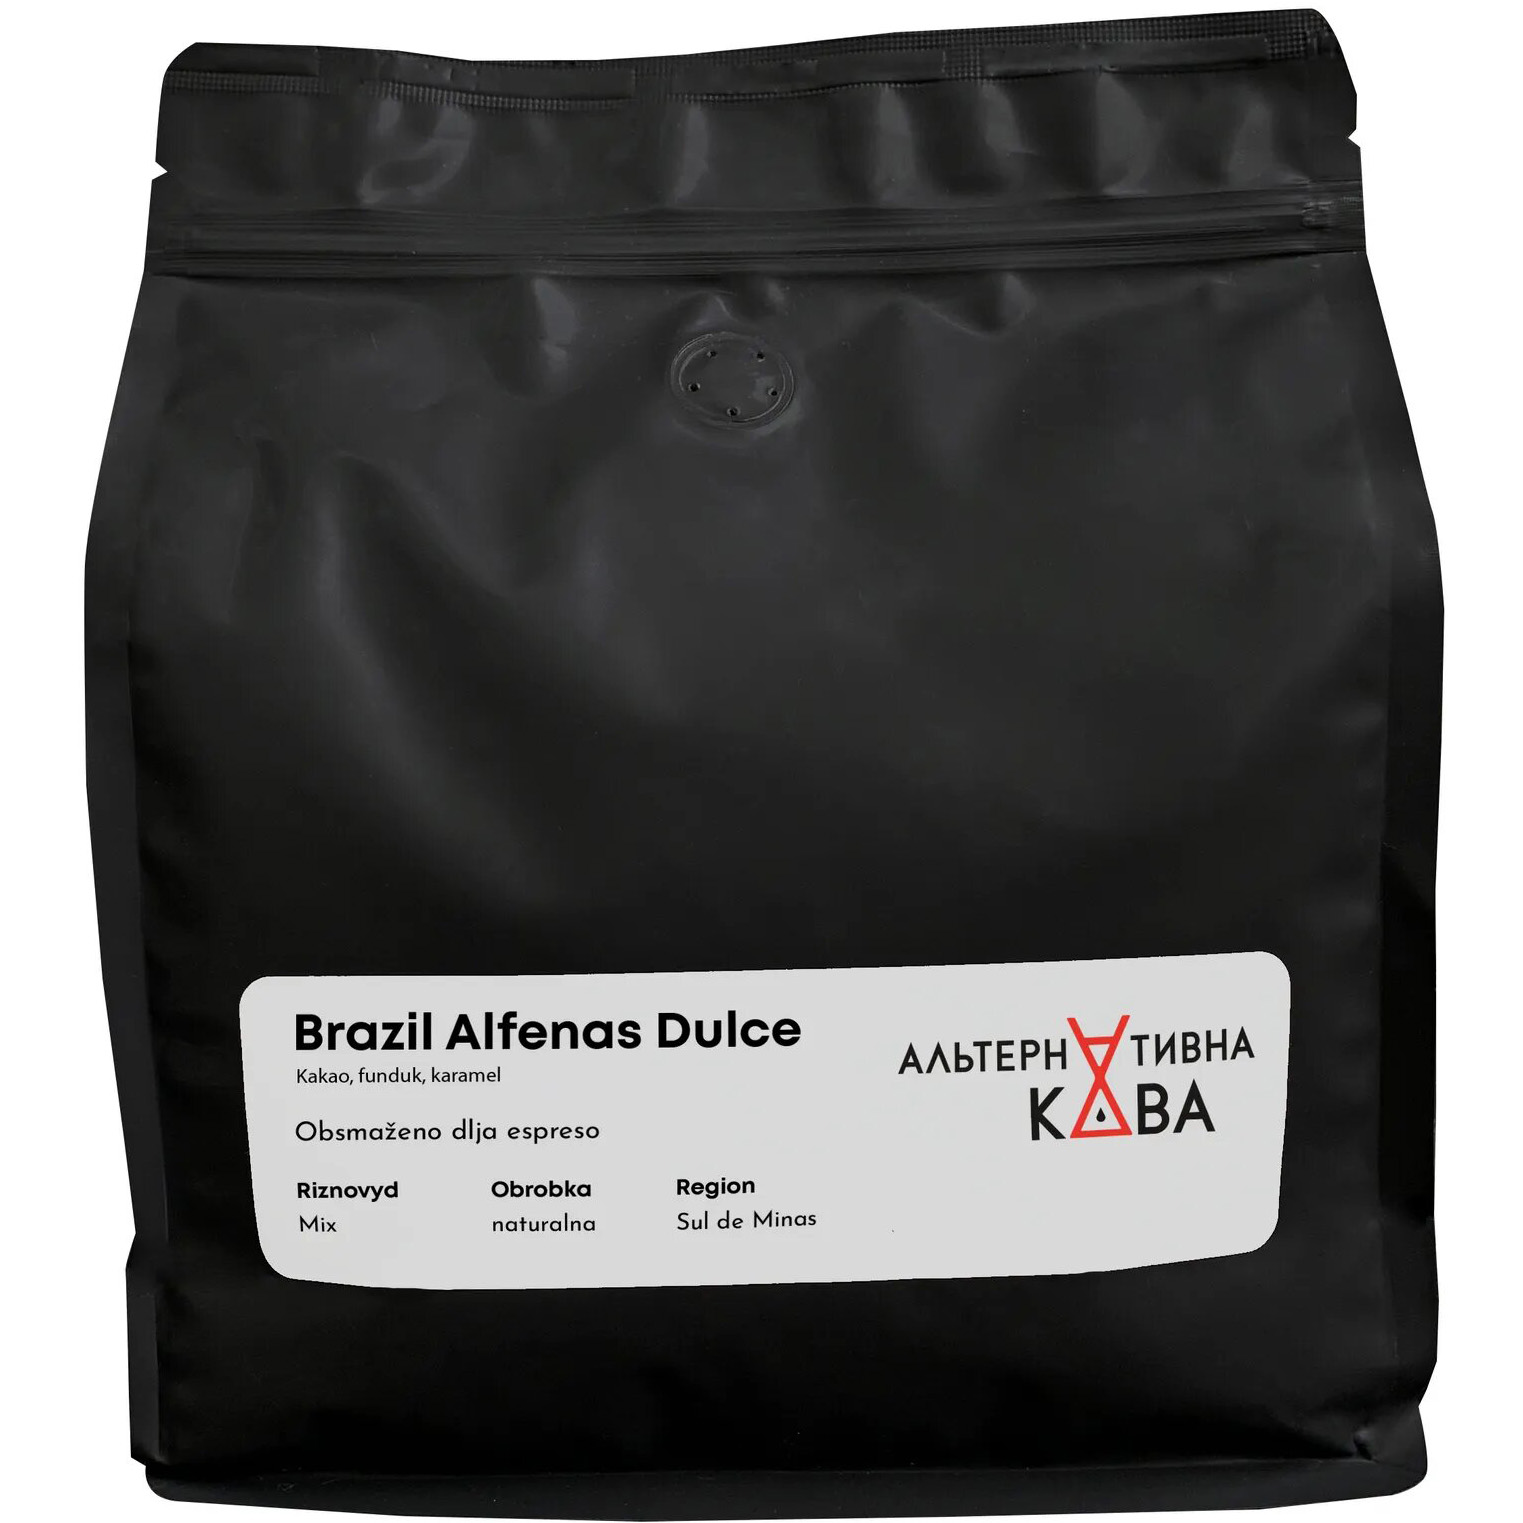 Кофе в зернах Альтернативна Кава Brazil Alfenac Dulce арабика 1 кг - фото 1